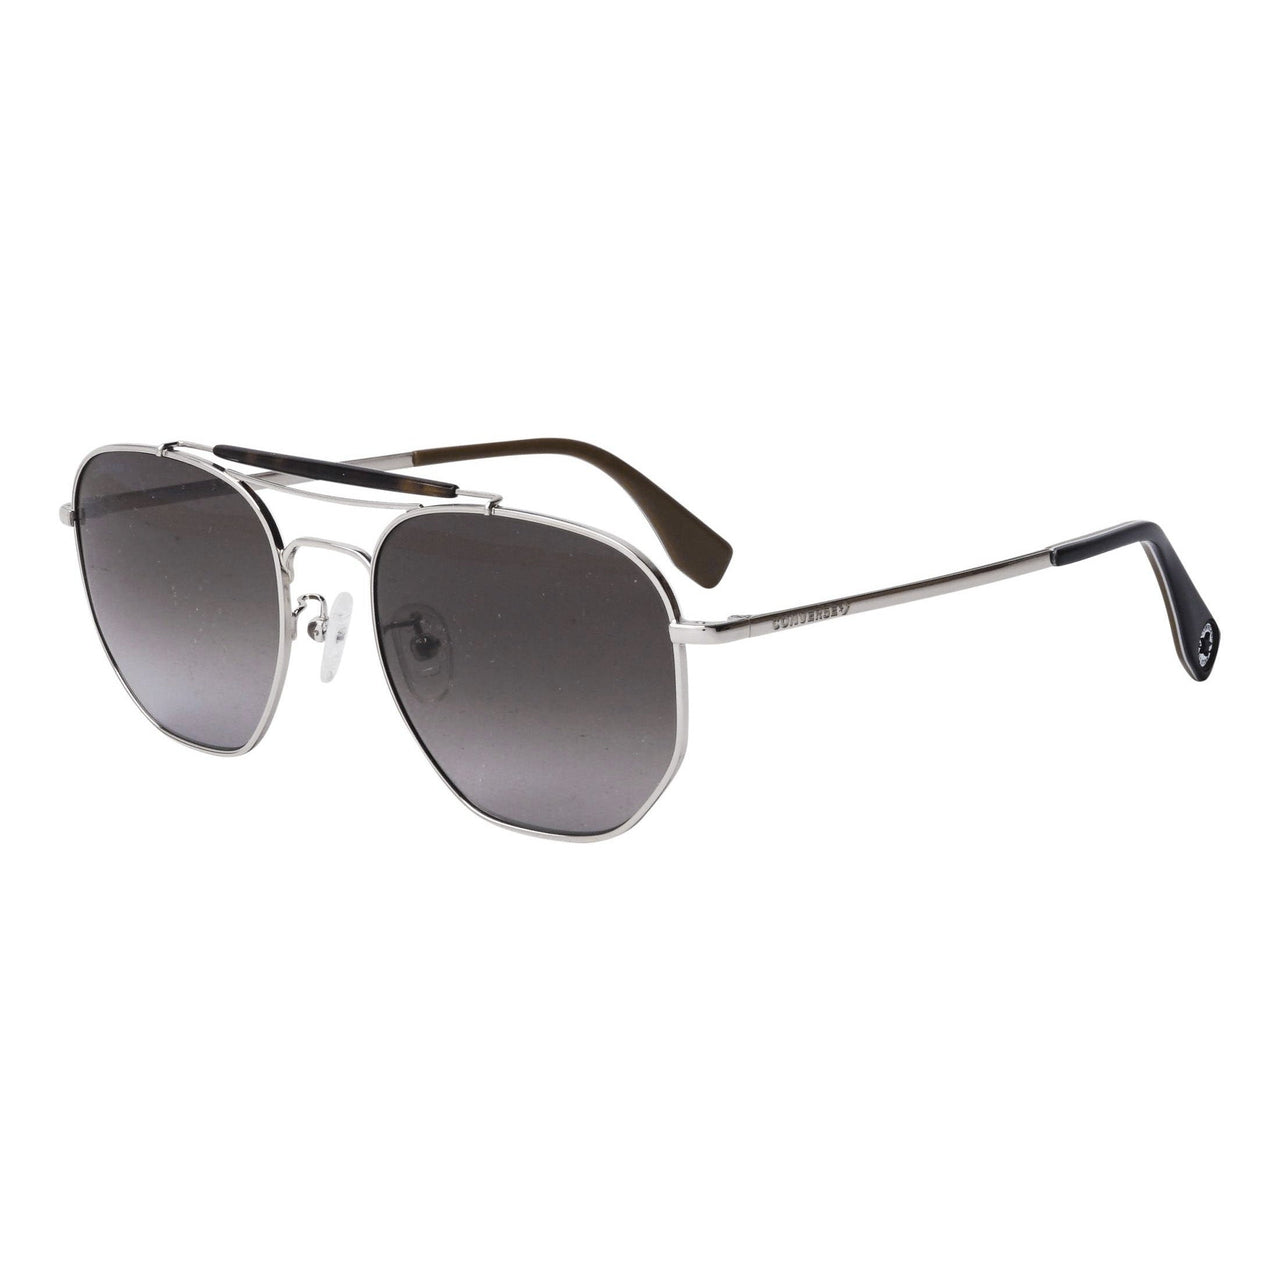 Converse Unisex Sunglasses Square Steel and Grey SCO138 0579